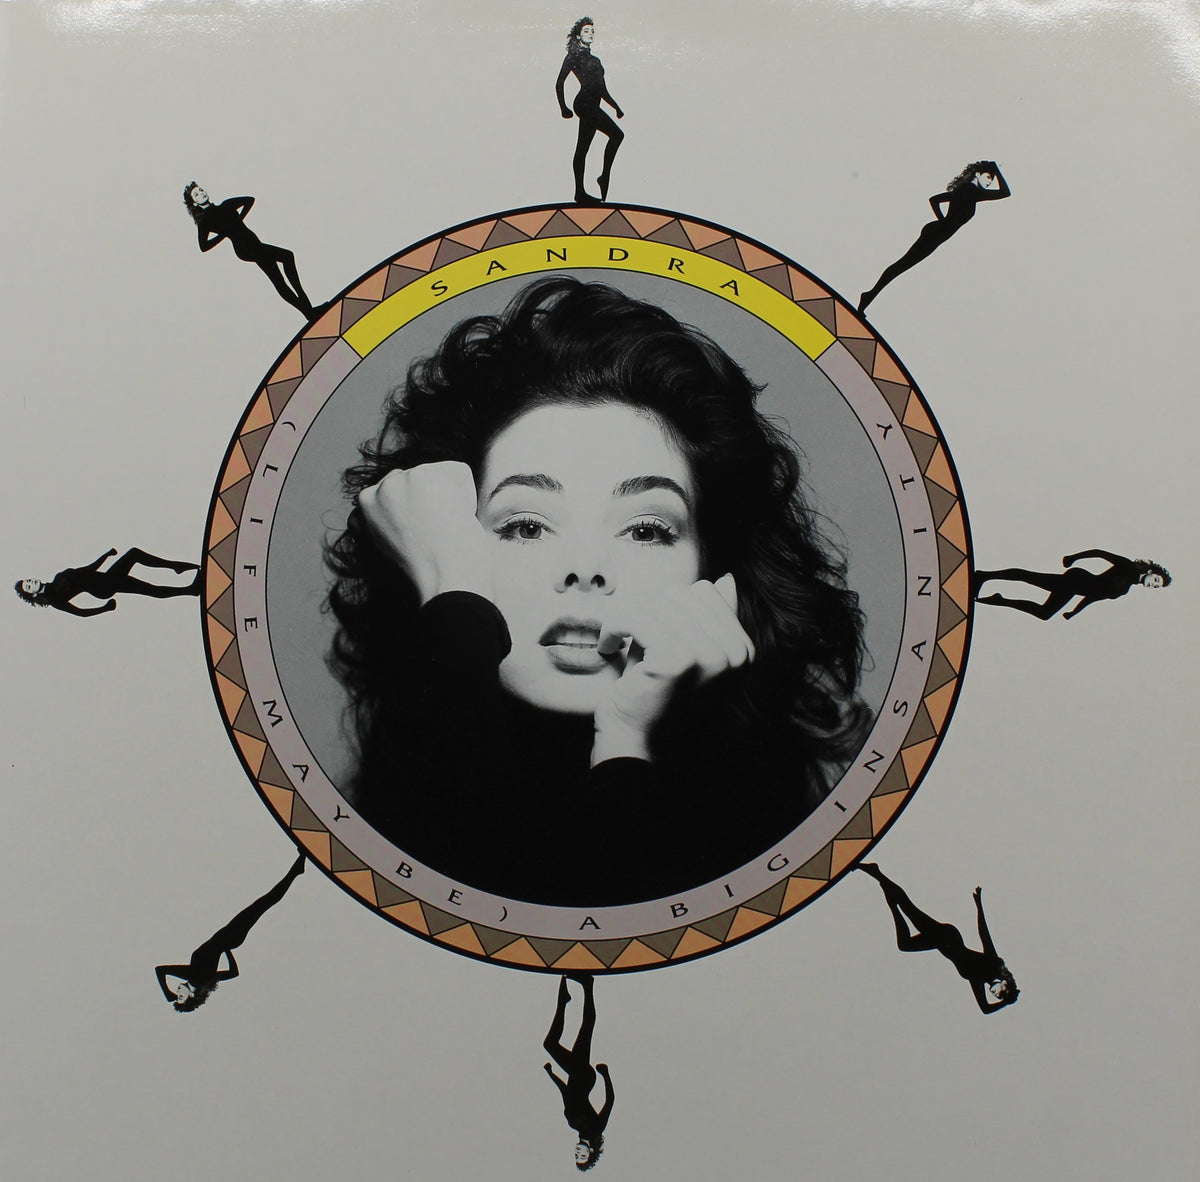 Sandra ‎– (Life May Be) A Big Insanity, Vinyl, 12&quot;, Maxi-Single, 45 RPM, NM/NM